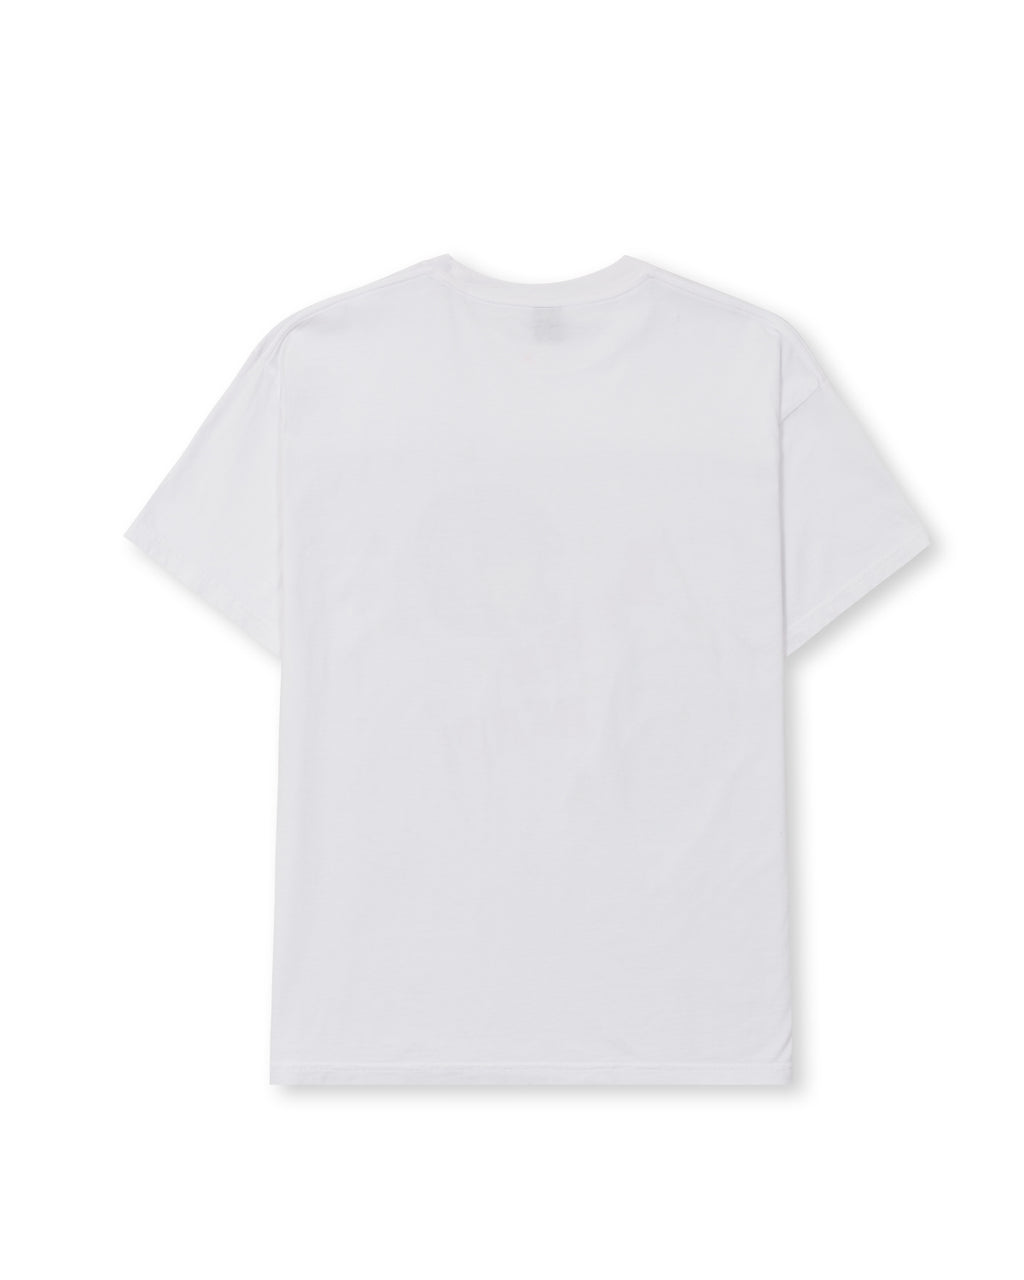 Friday Night Kisses T-Shirt - White 2